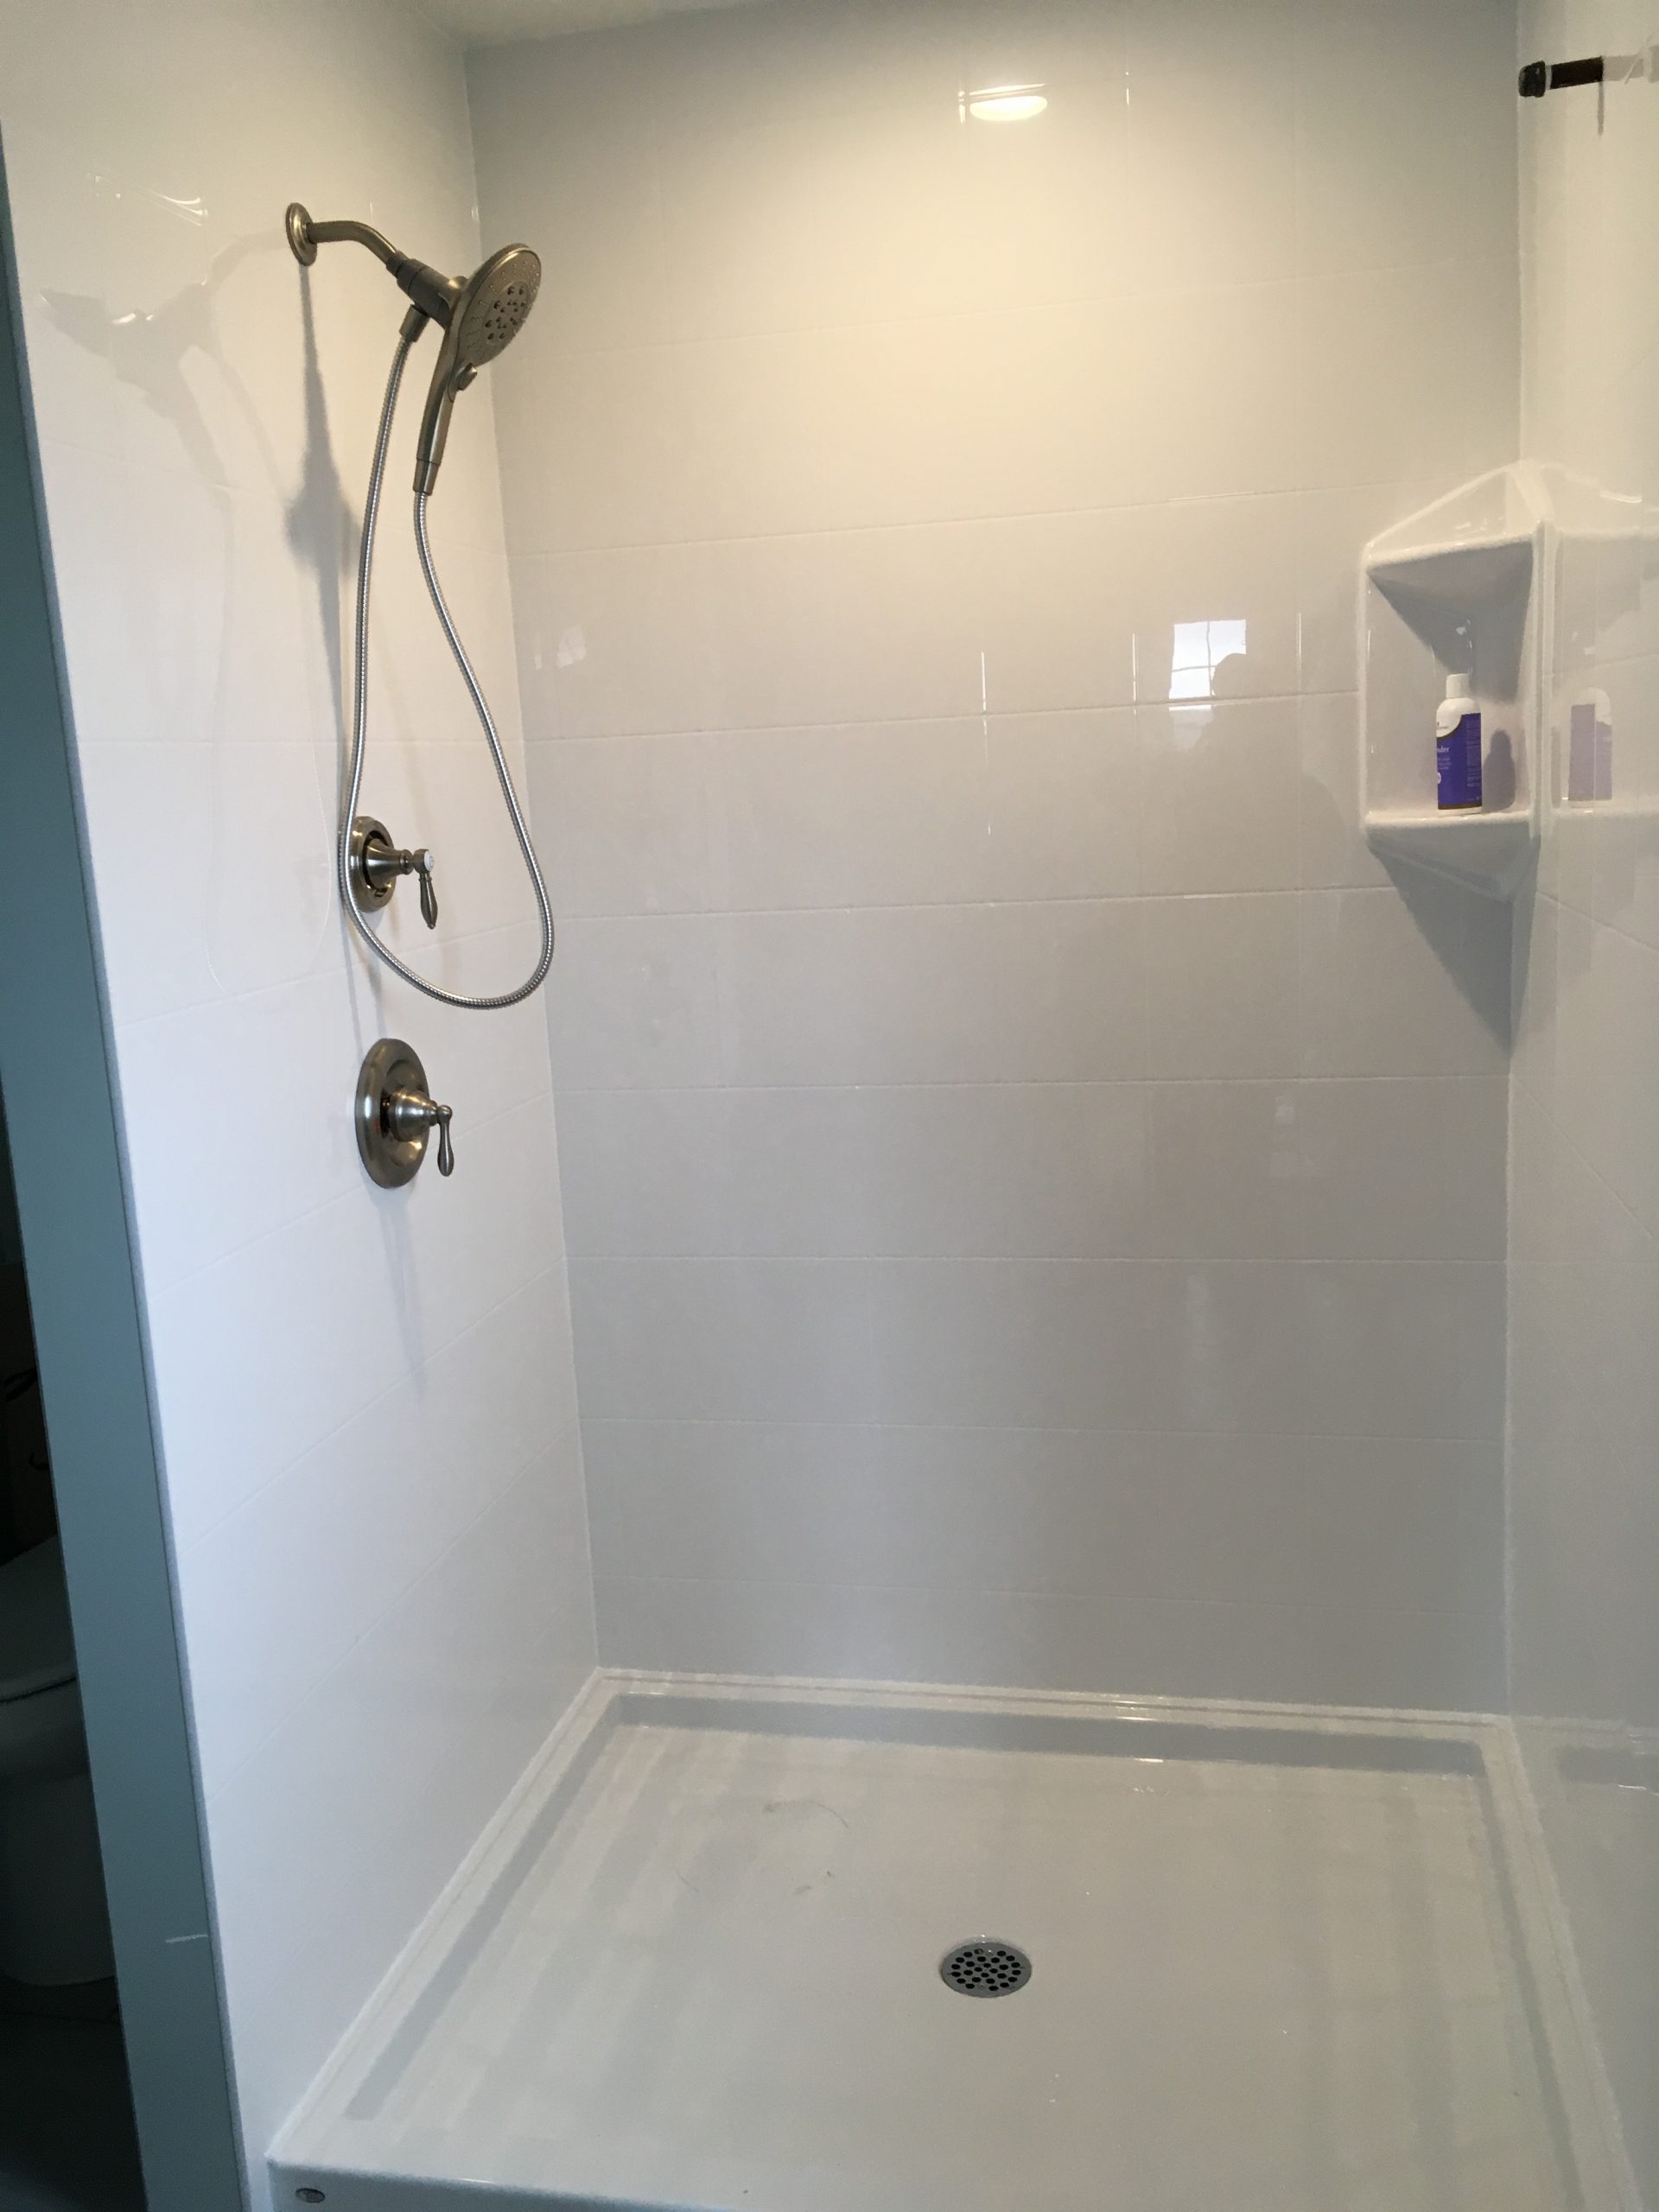 New Shower Floor and Tile by Jim Brown Interior Reglazing, Okanagan